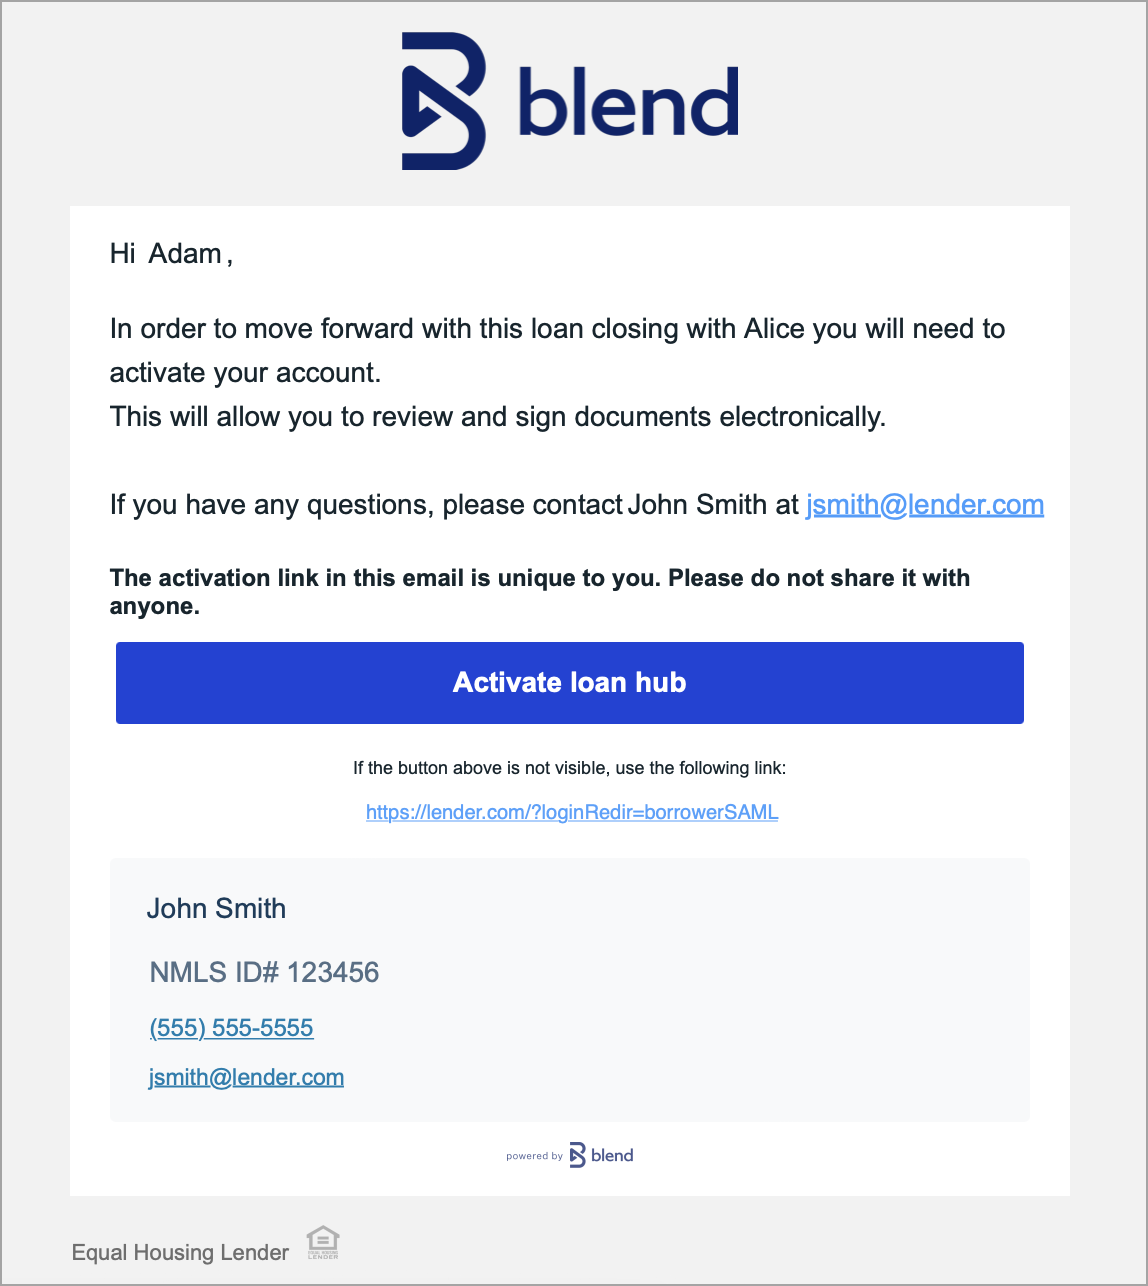 blend_tpr_activation_email.png